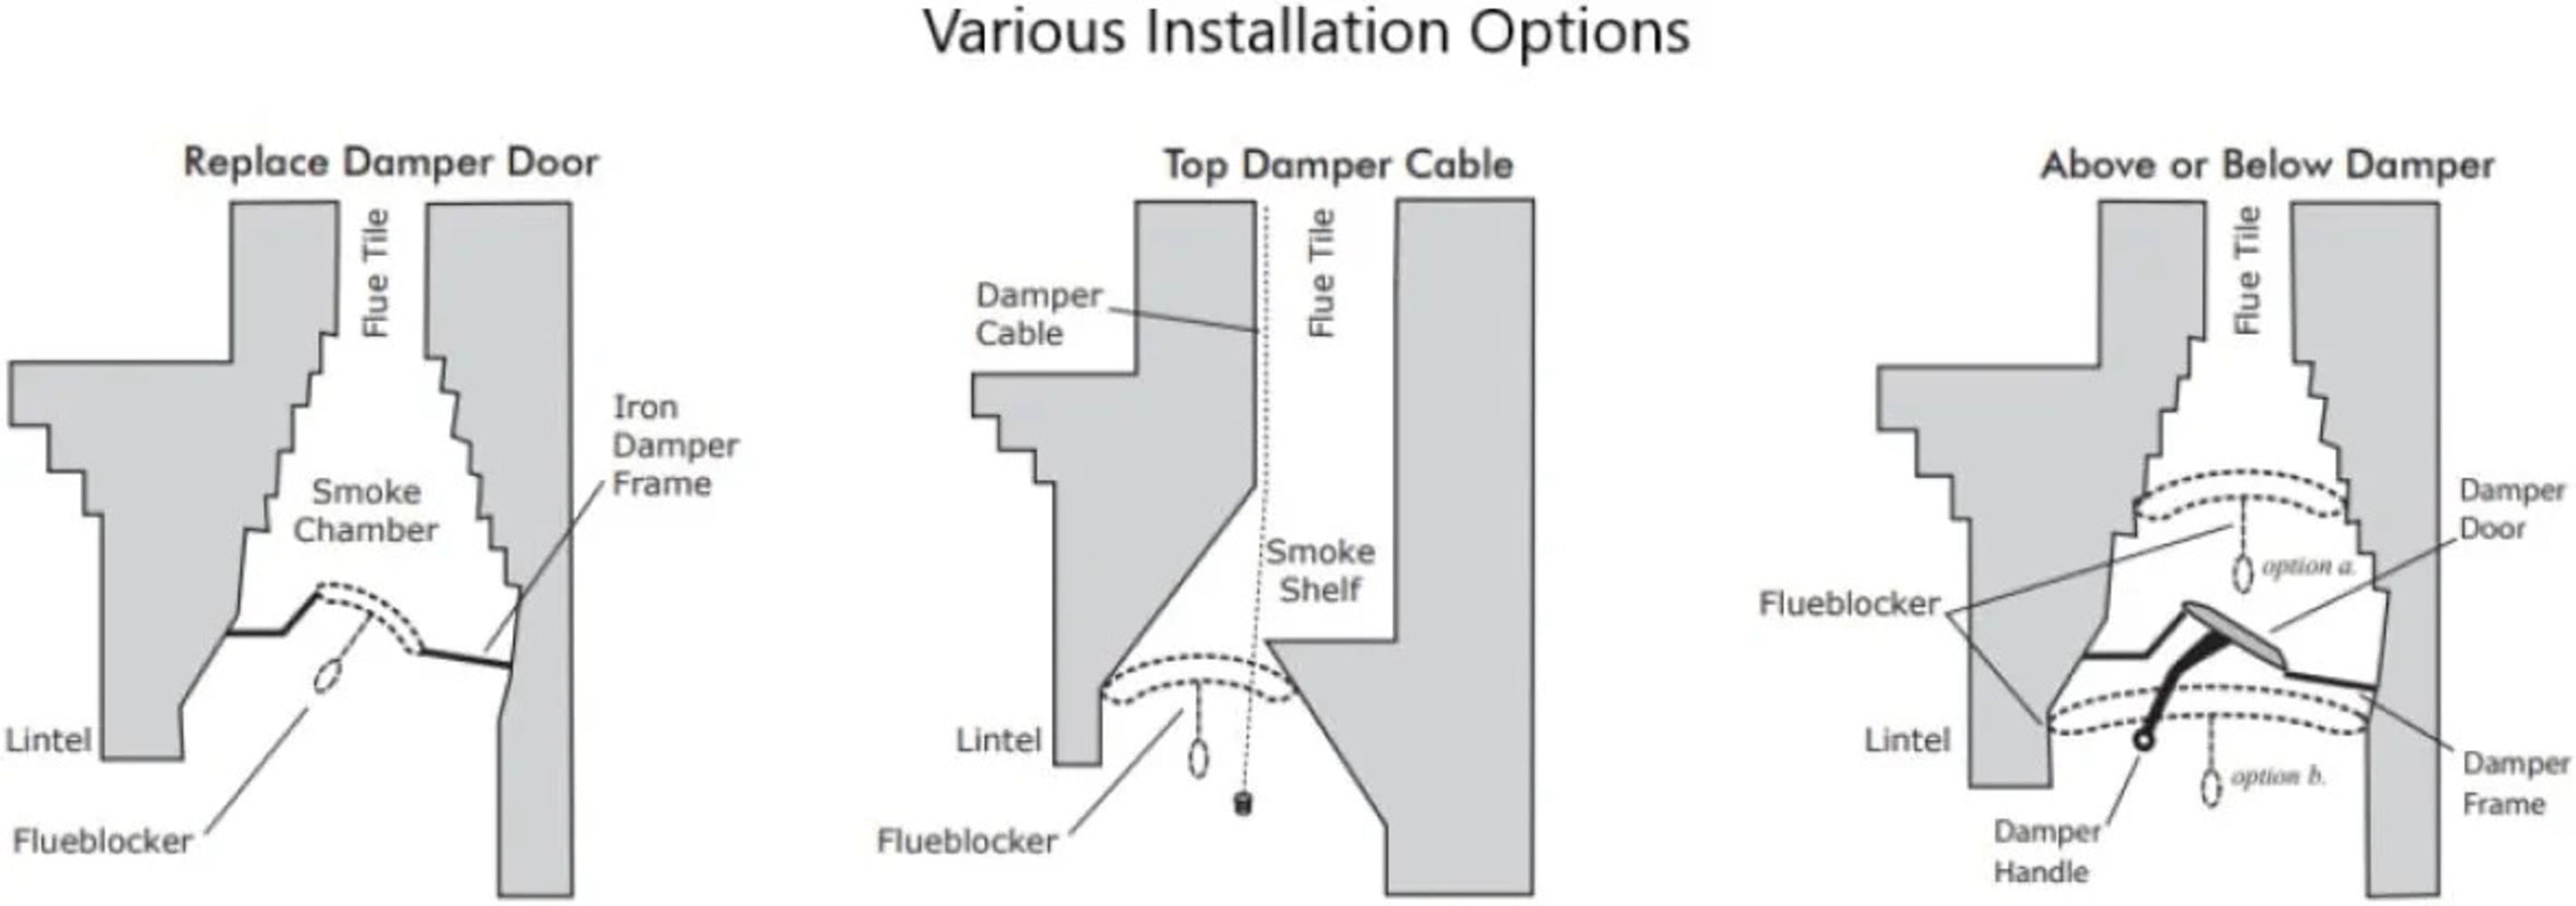 Flueblocker for 8X24 Wool Material Chimney Flue – Chimney Sheep Fireplace  Draft Stopper Plug Replacement Damper Fireplace Tool - Save Energy Block